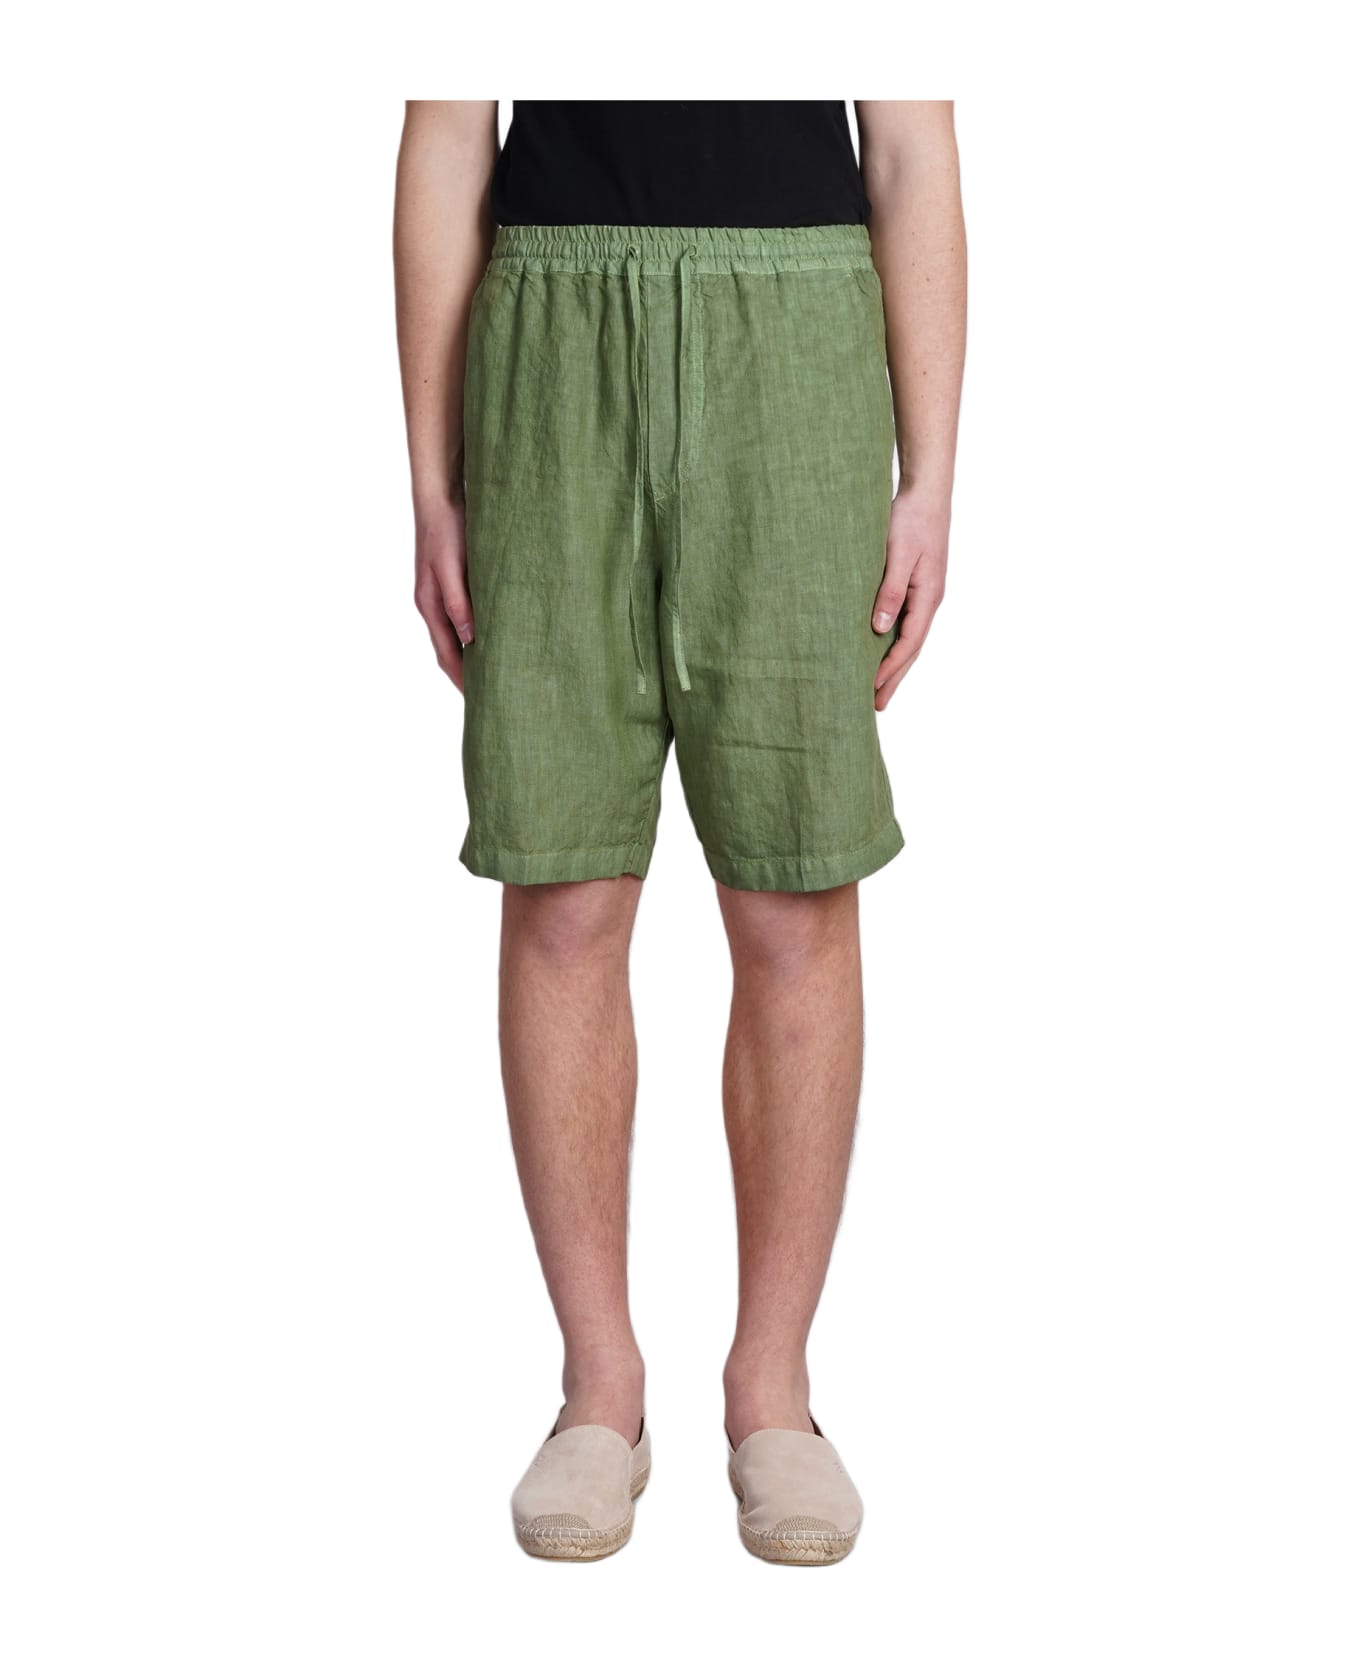 120% Lino Shorts In Green Linen - green